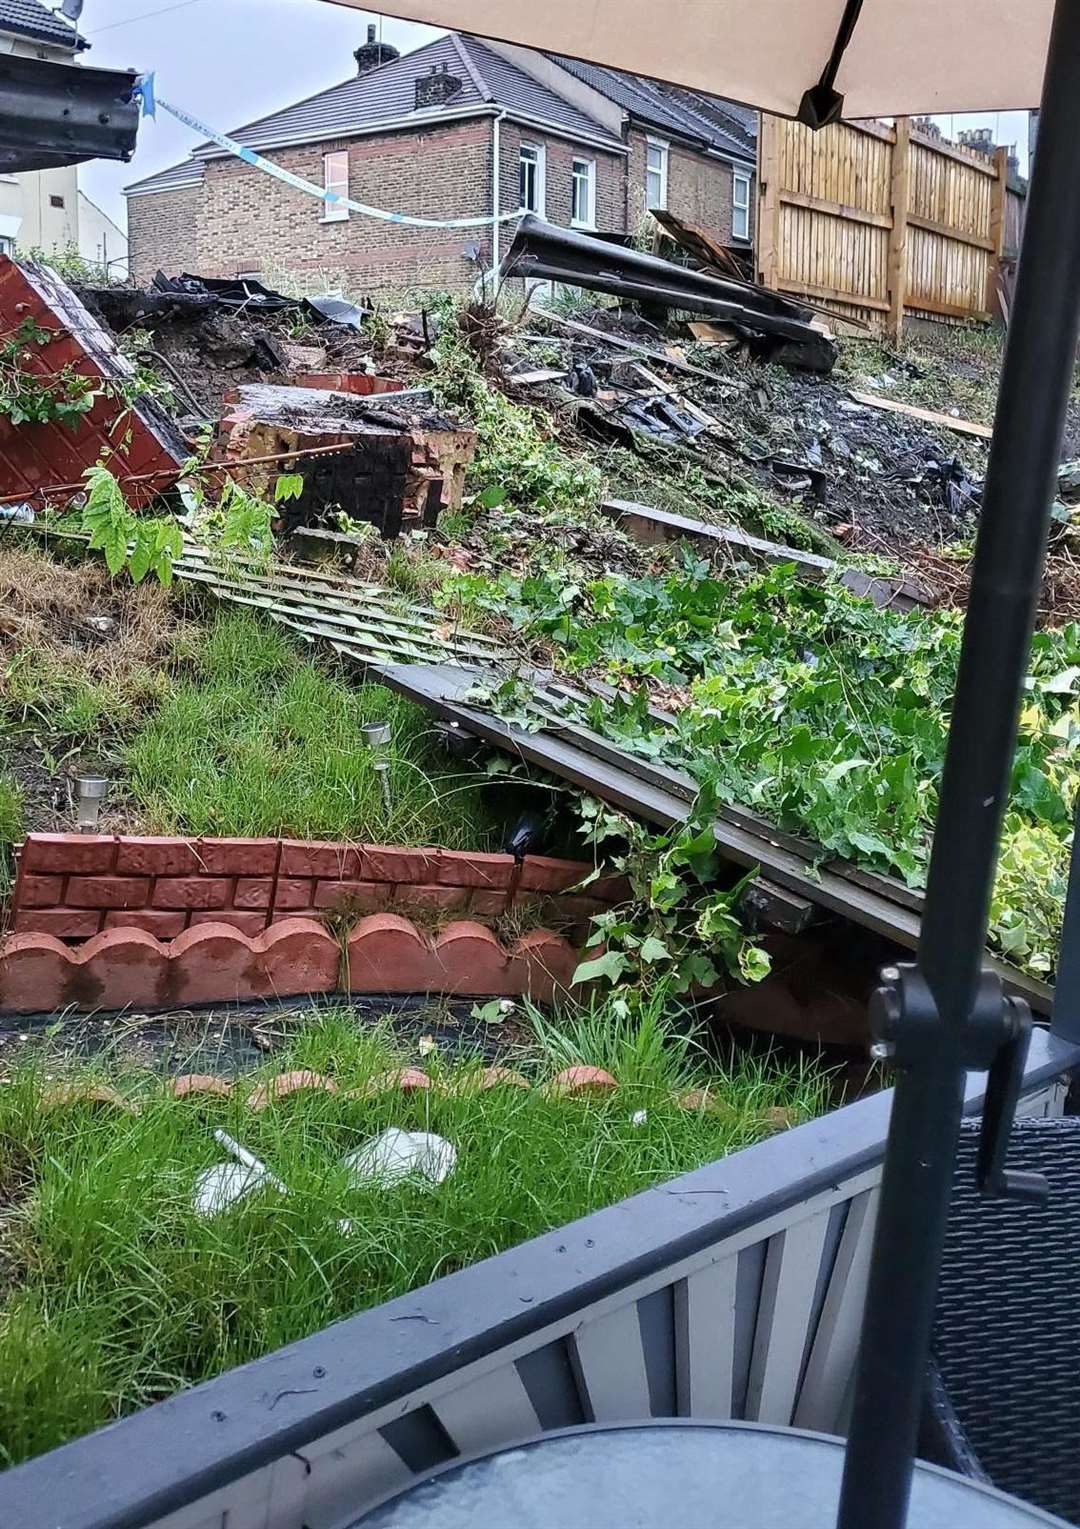 Car wrecks garden after crash